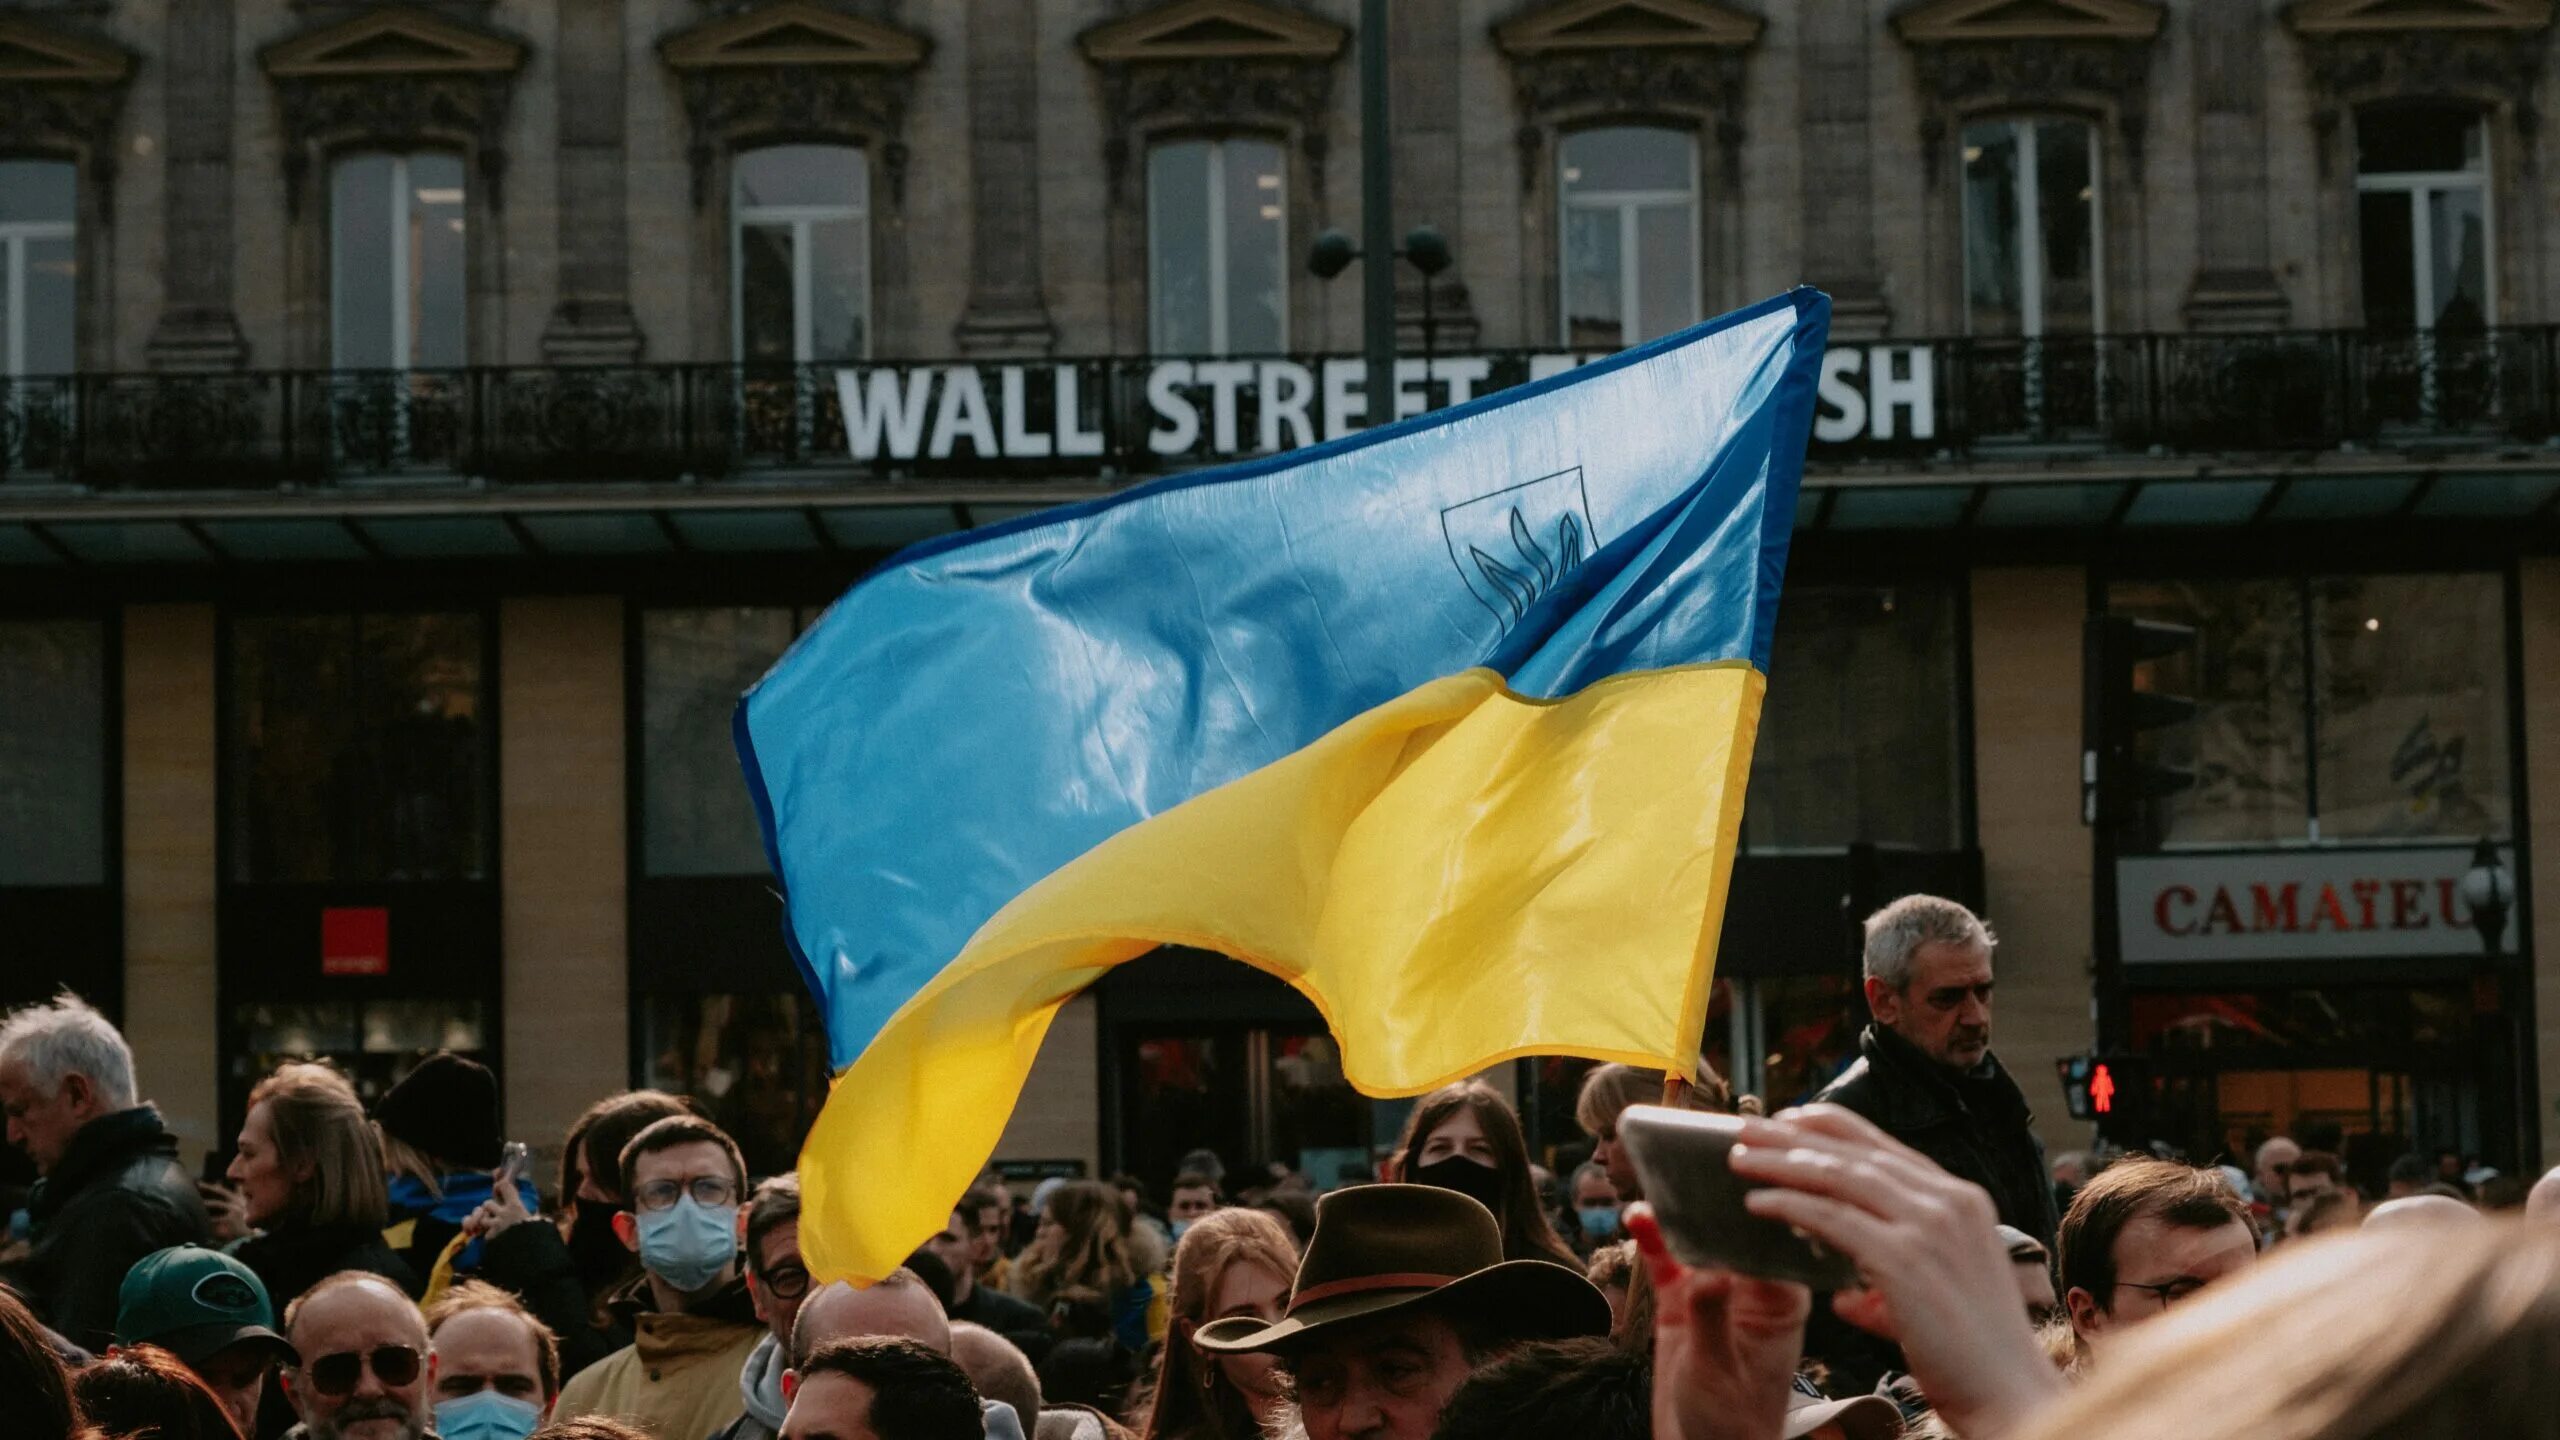 Митинг украинцев. Митинги украинцев в Европе. Украинцы протестуют в Европе. Украинские митинги в ЕС. Украинцы митингуют в Европе.